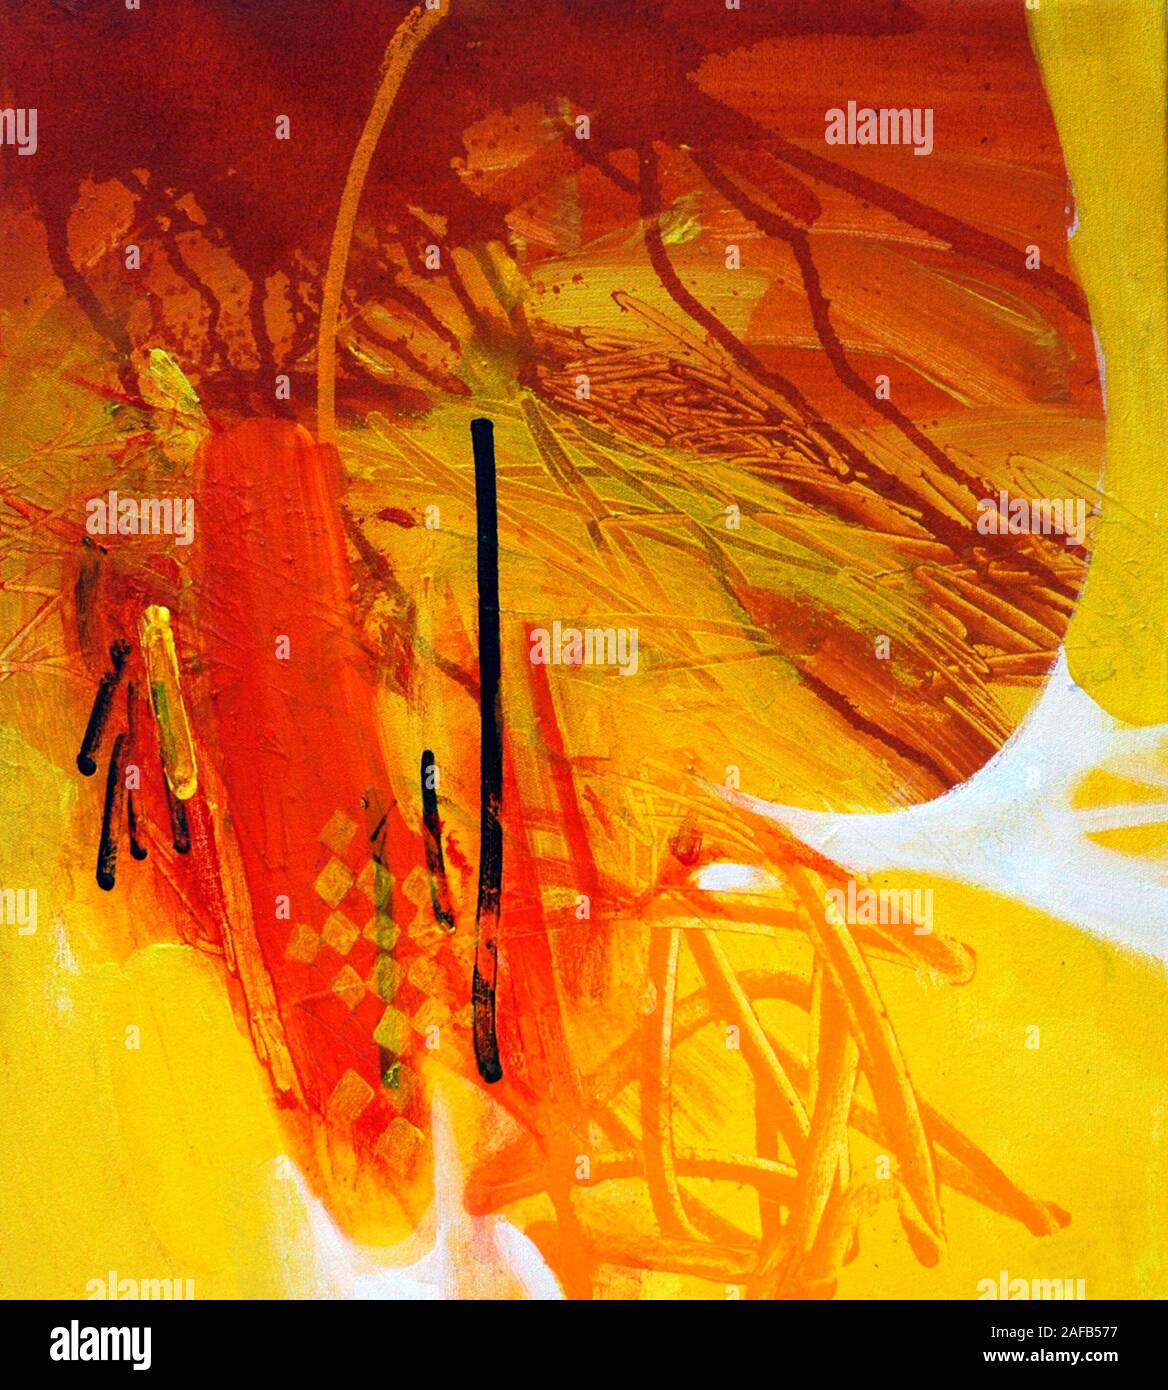 Abstrakte farbenfrohe Ölgemälde auf Leinwand Textur, Öl Gemälde Hintergrund. Moderne Kunst ölgemälde. Stockfoto